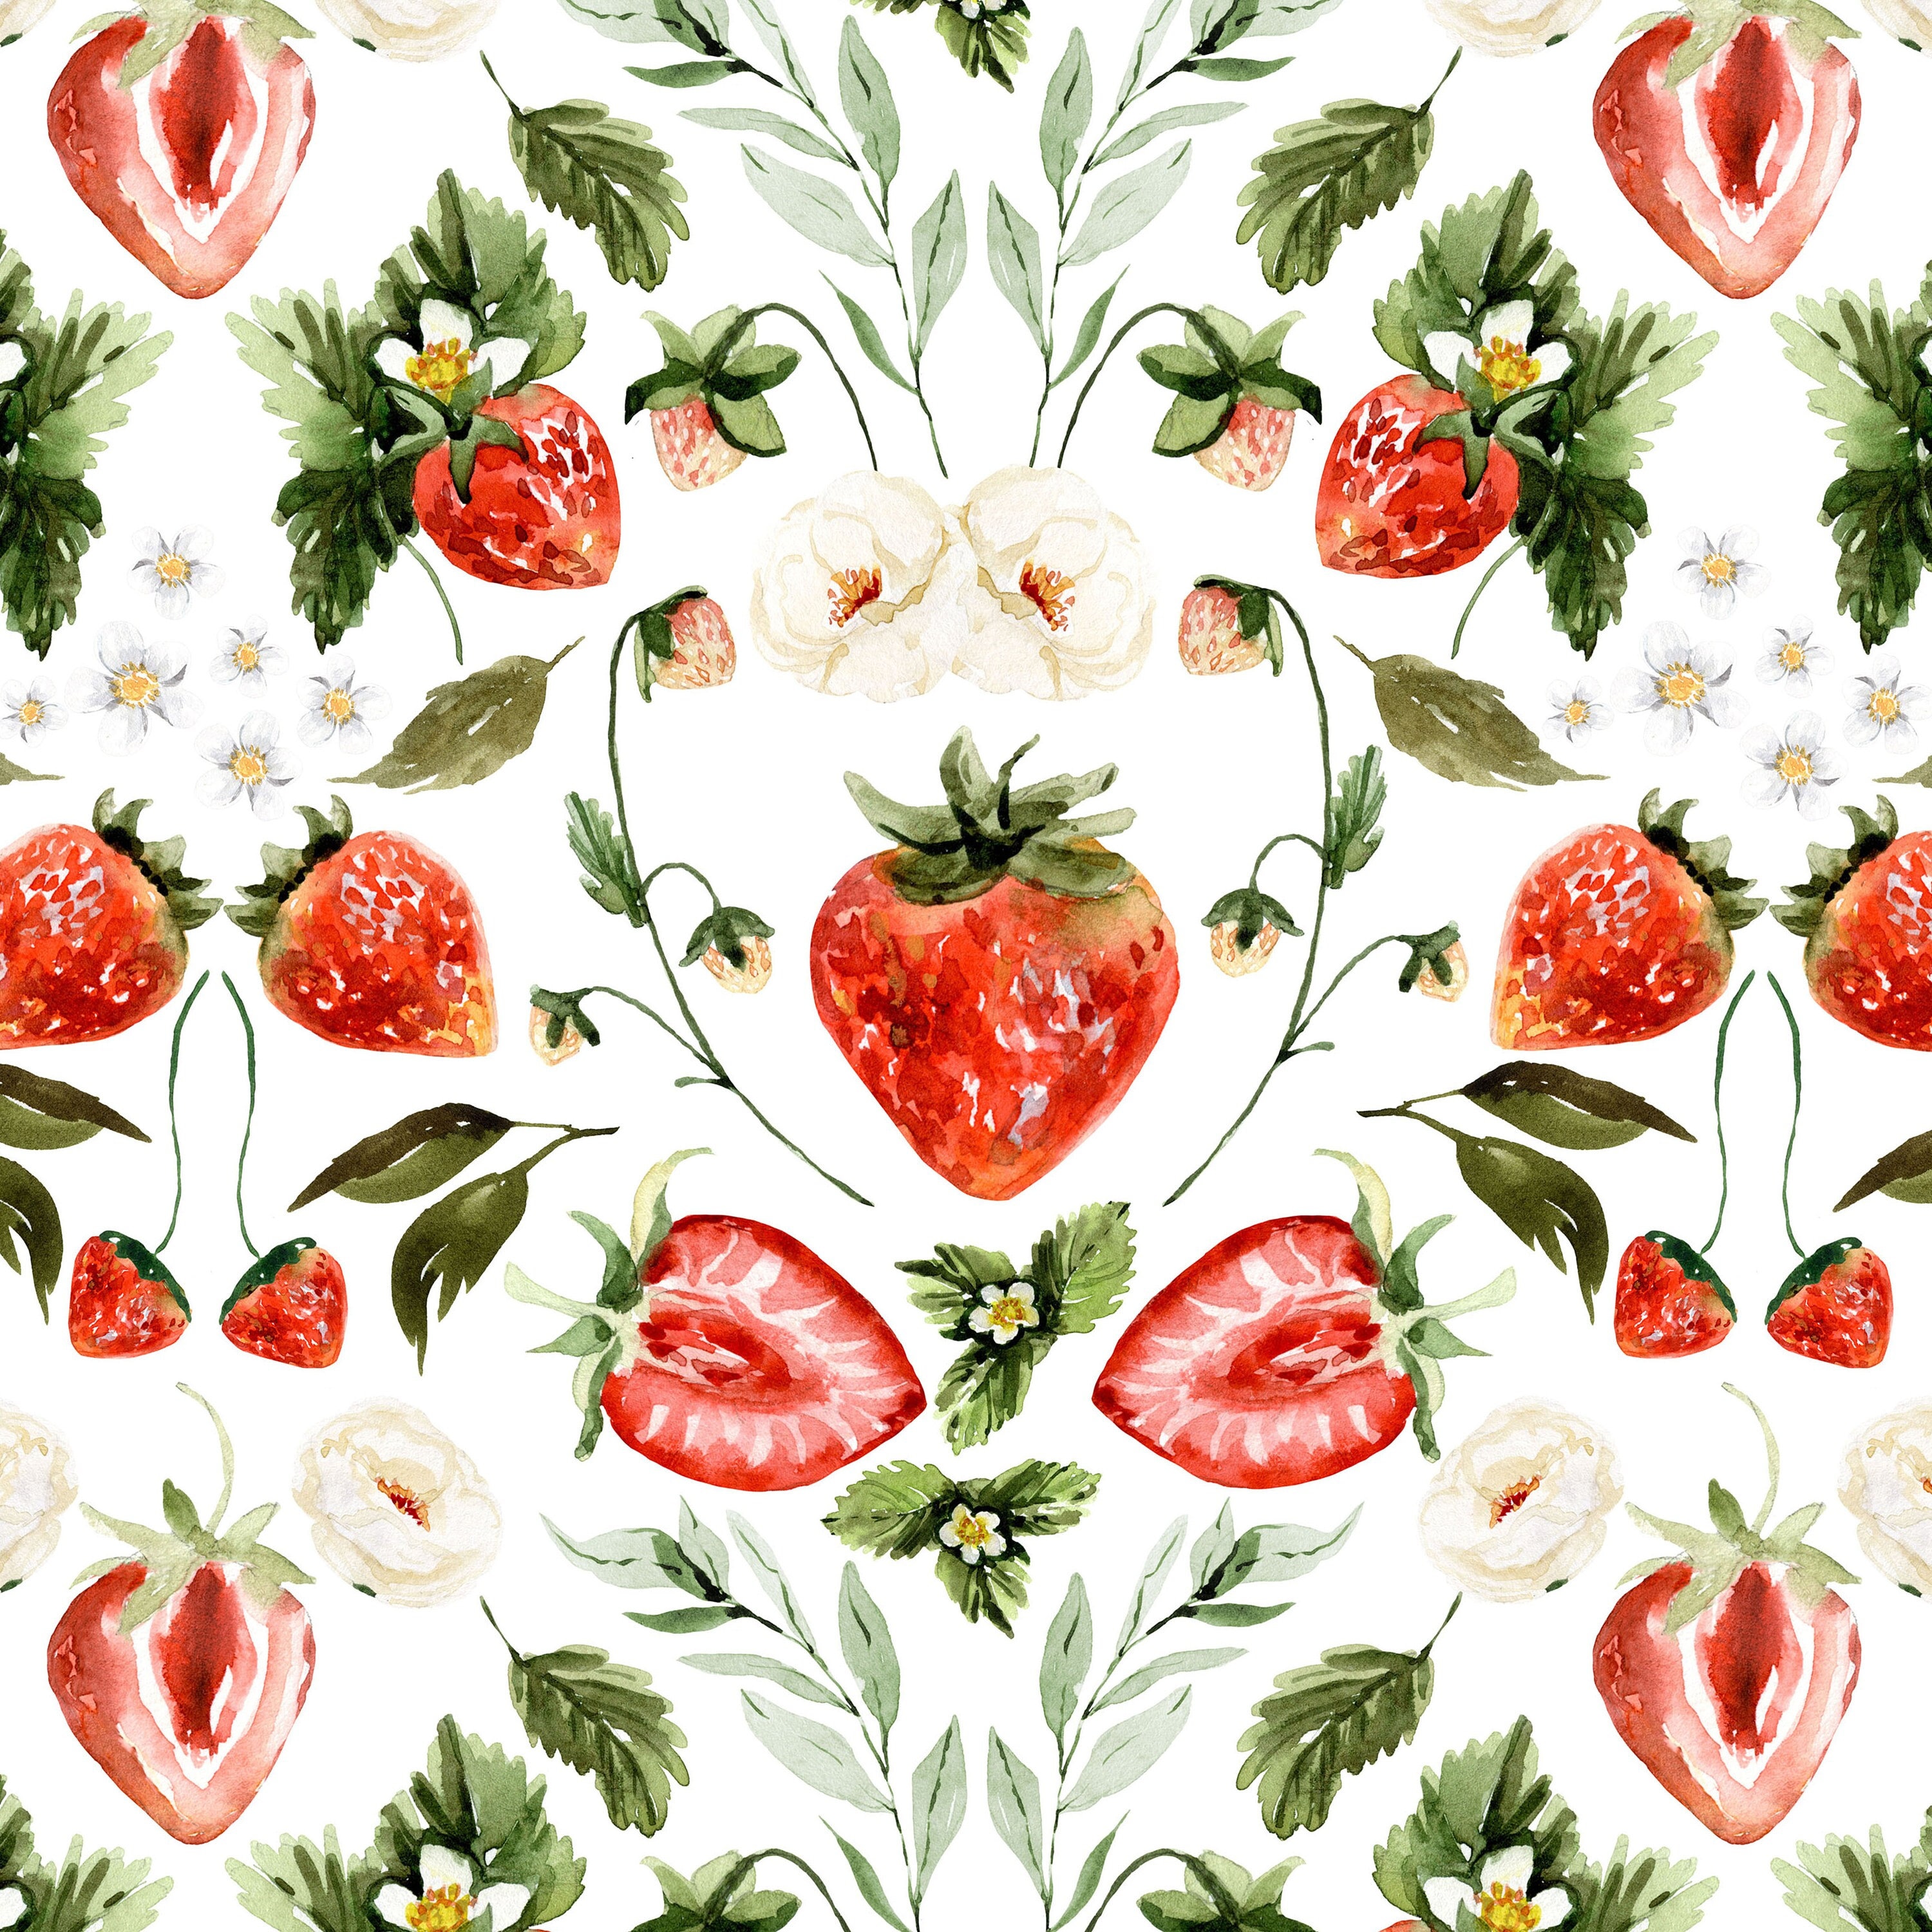 Strawberries on White Interlock Knit Fabric by POP!